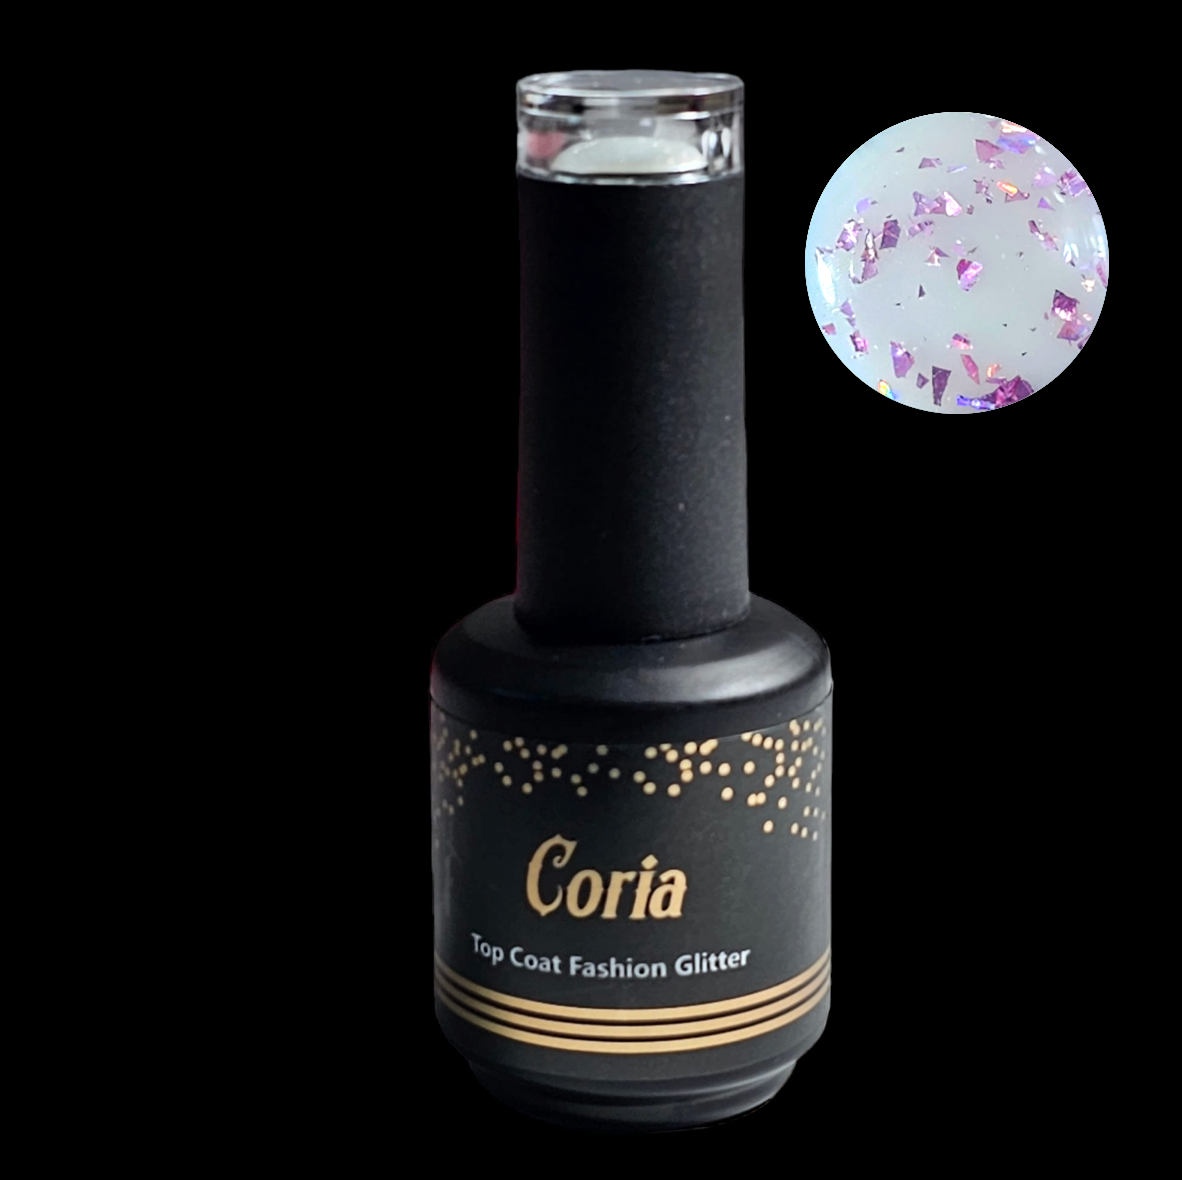 Top Coat Fashion Glitter Coria 15 ml 122